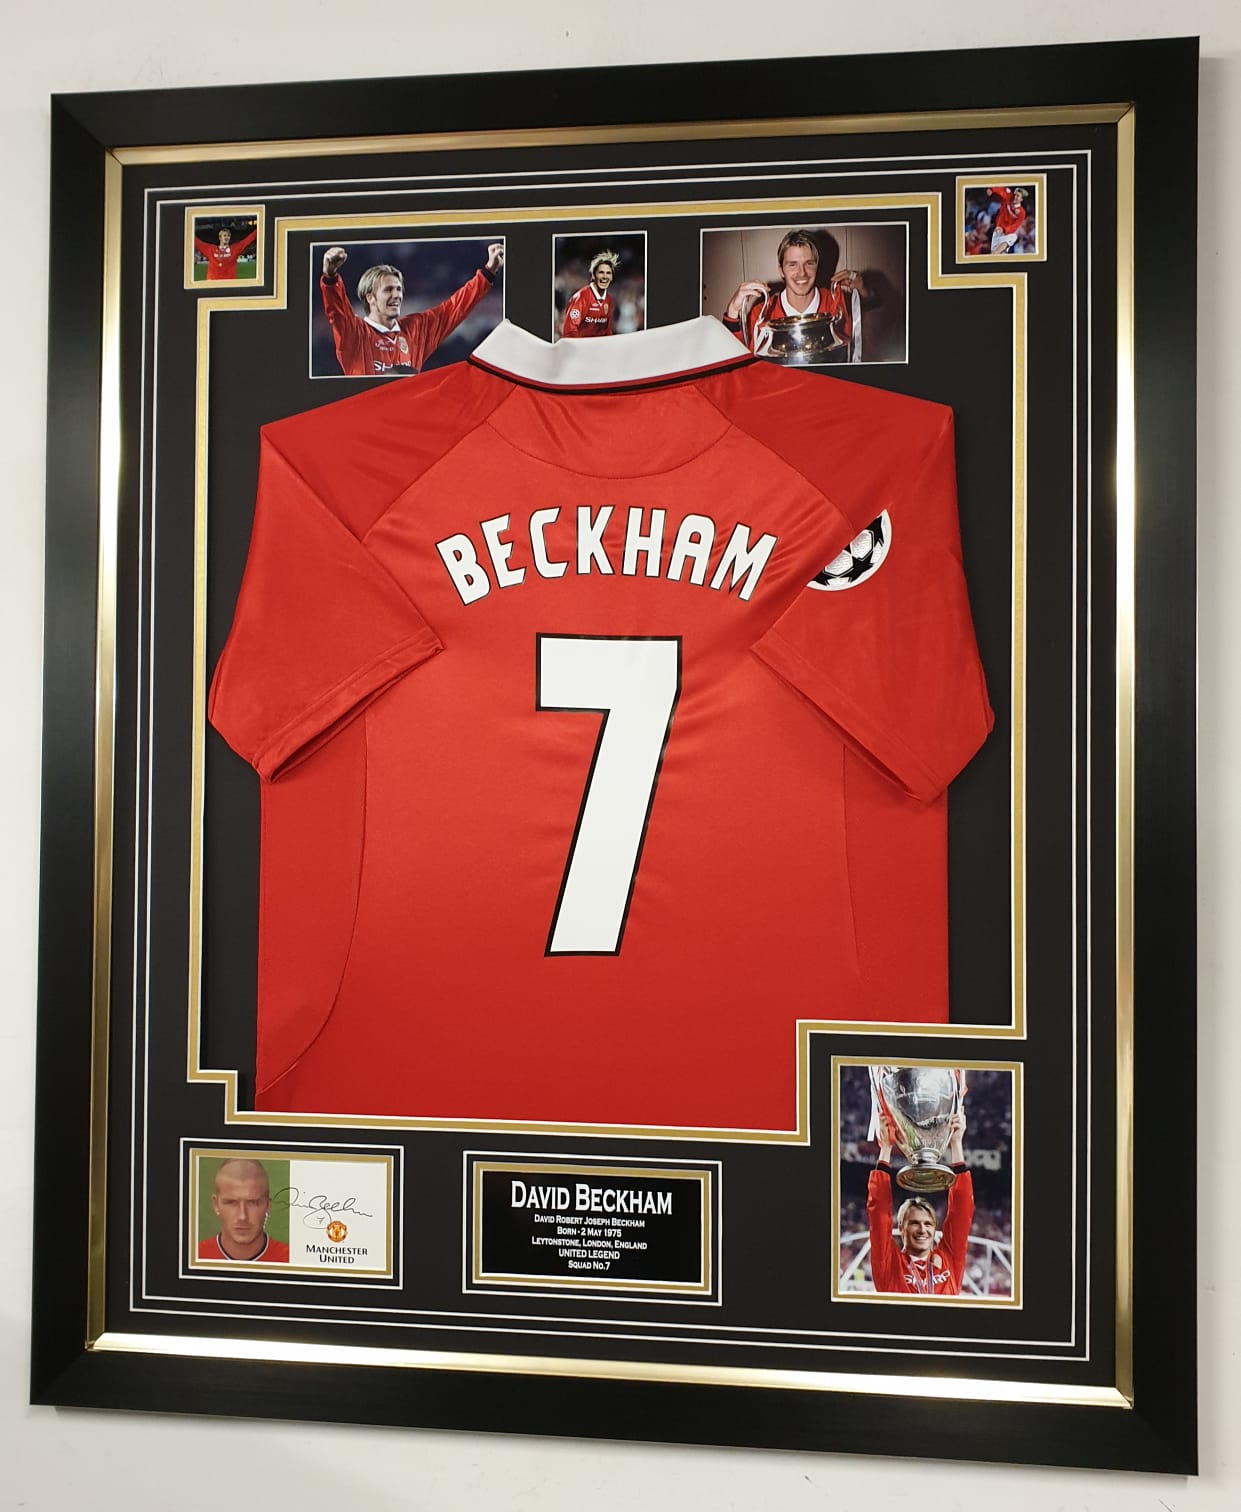 beckham man united jersey